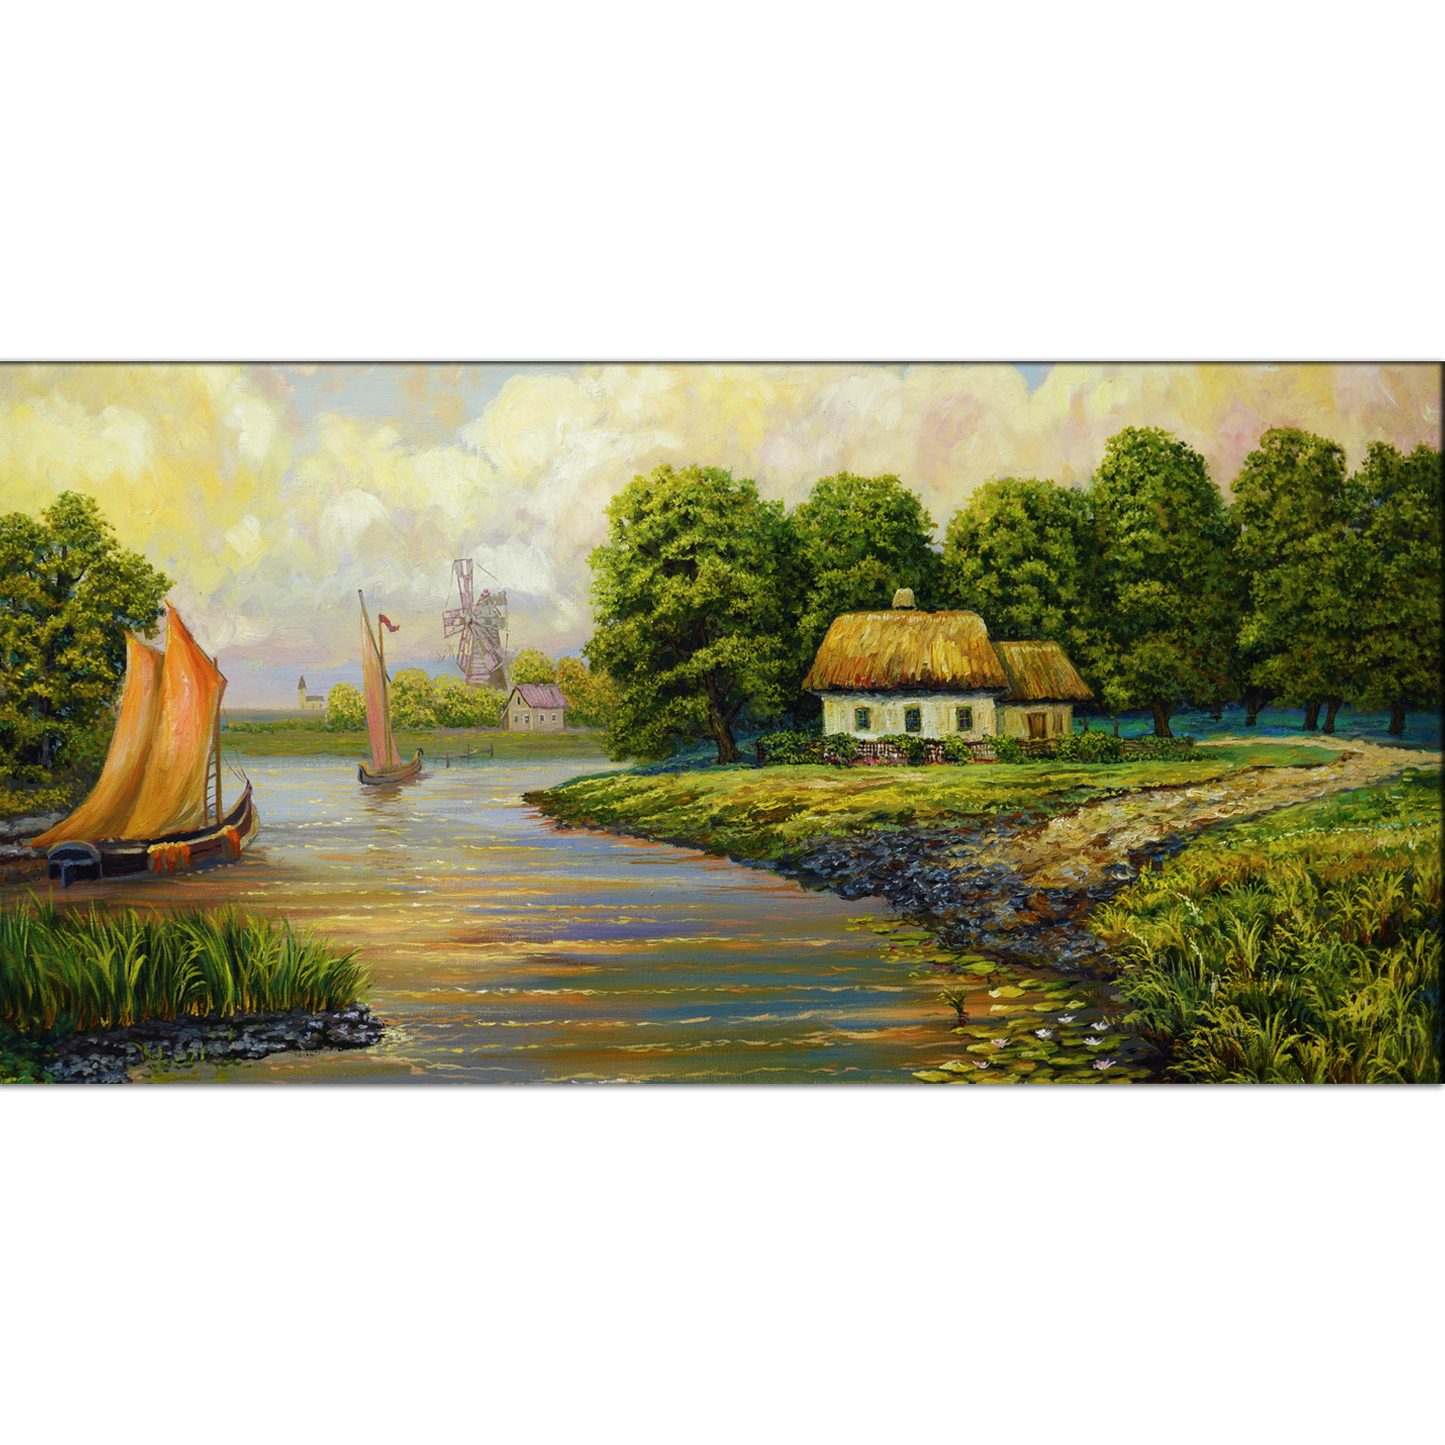 River, Boat & Village Abstract Canvas Print Wall Painting